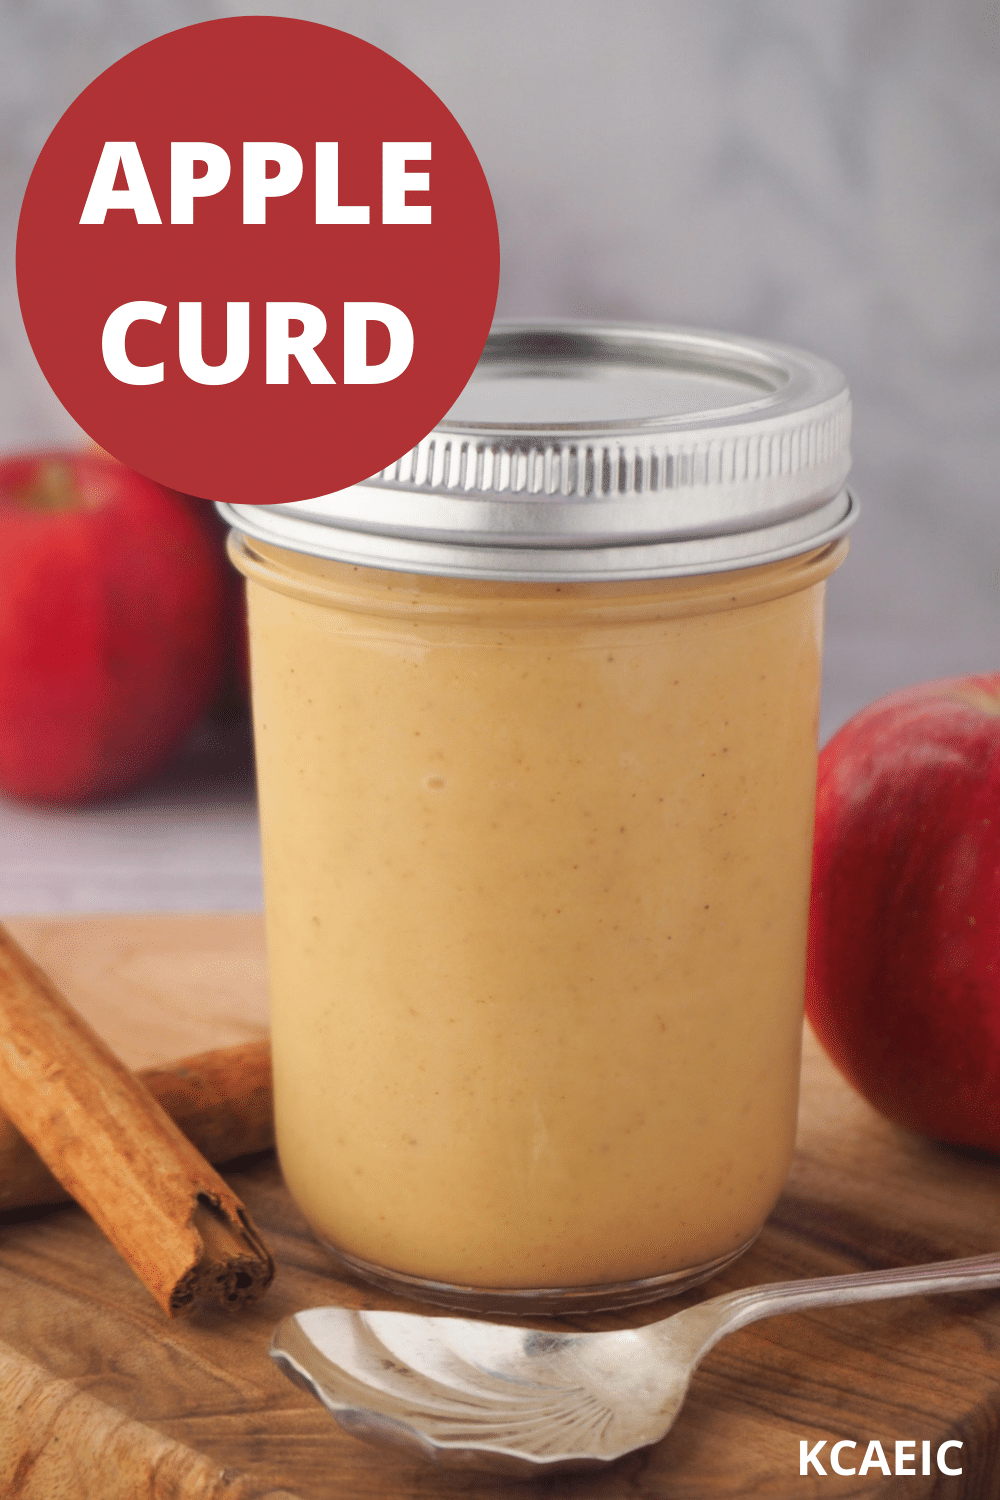 Jar of apple curd to spoon, fresh apples, cinnamon sticks and text overlay, apple curd and KCAEIC.